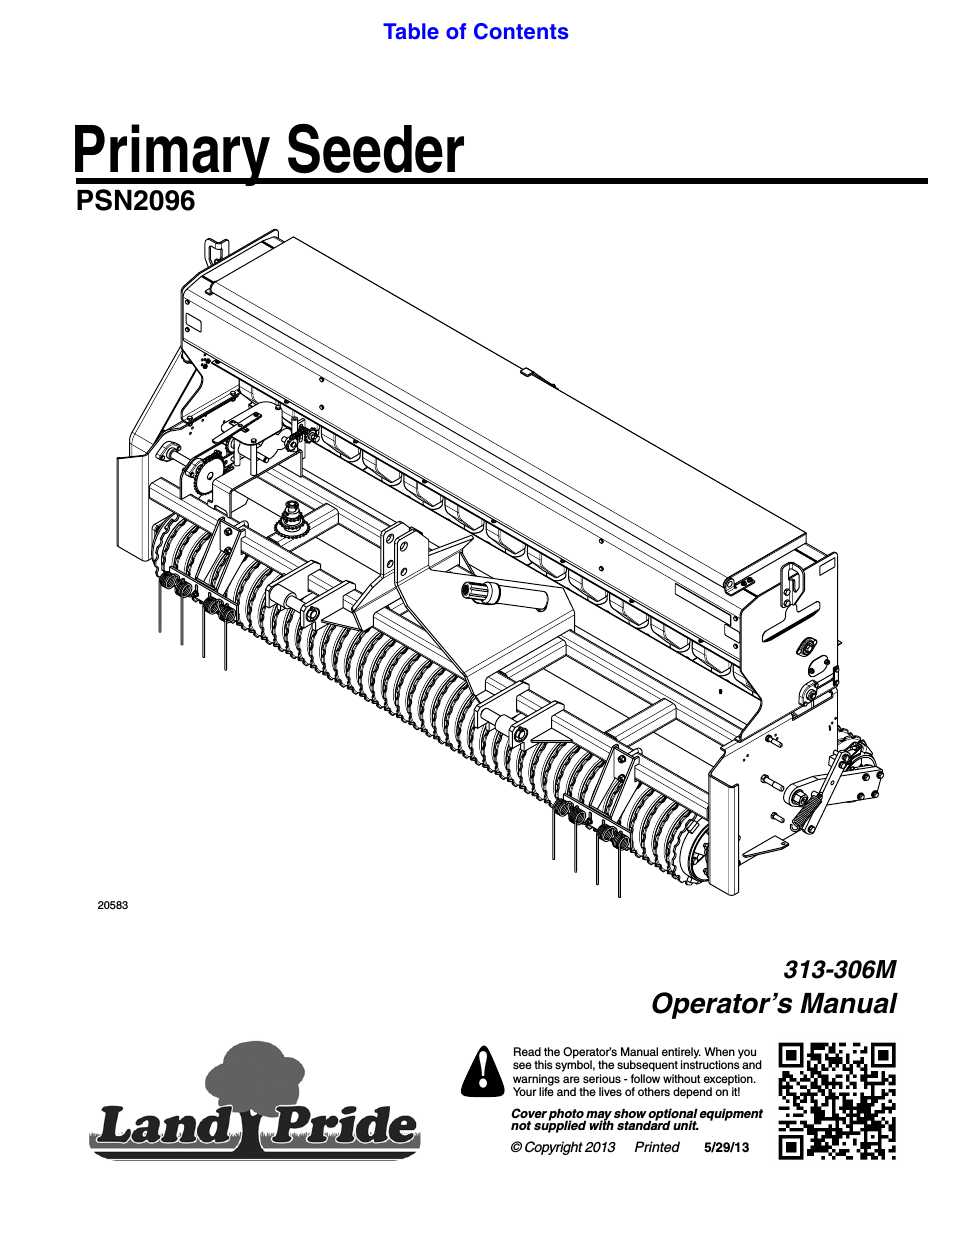 Primary Seeders PSN2096